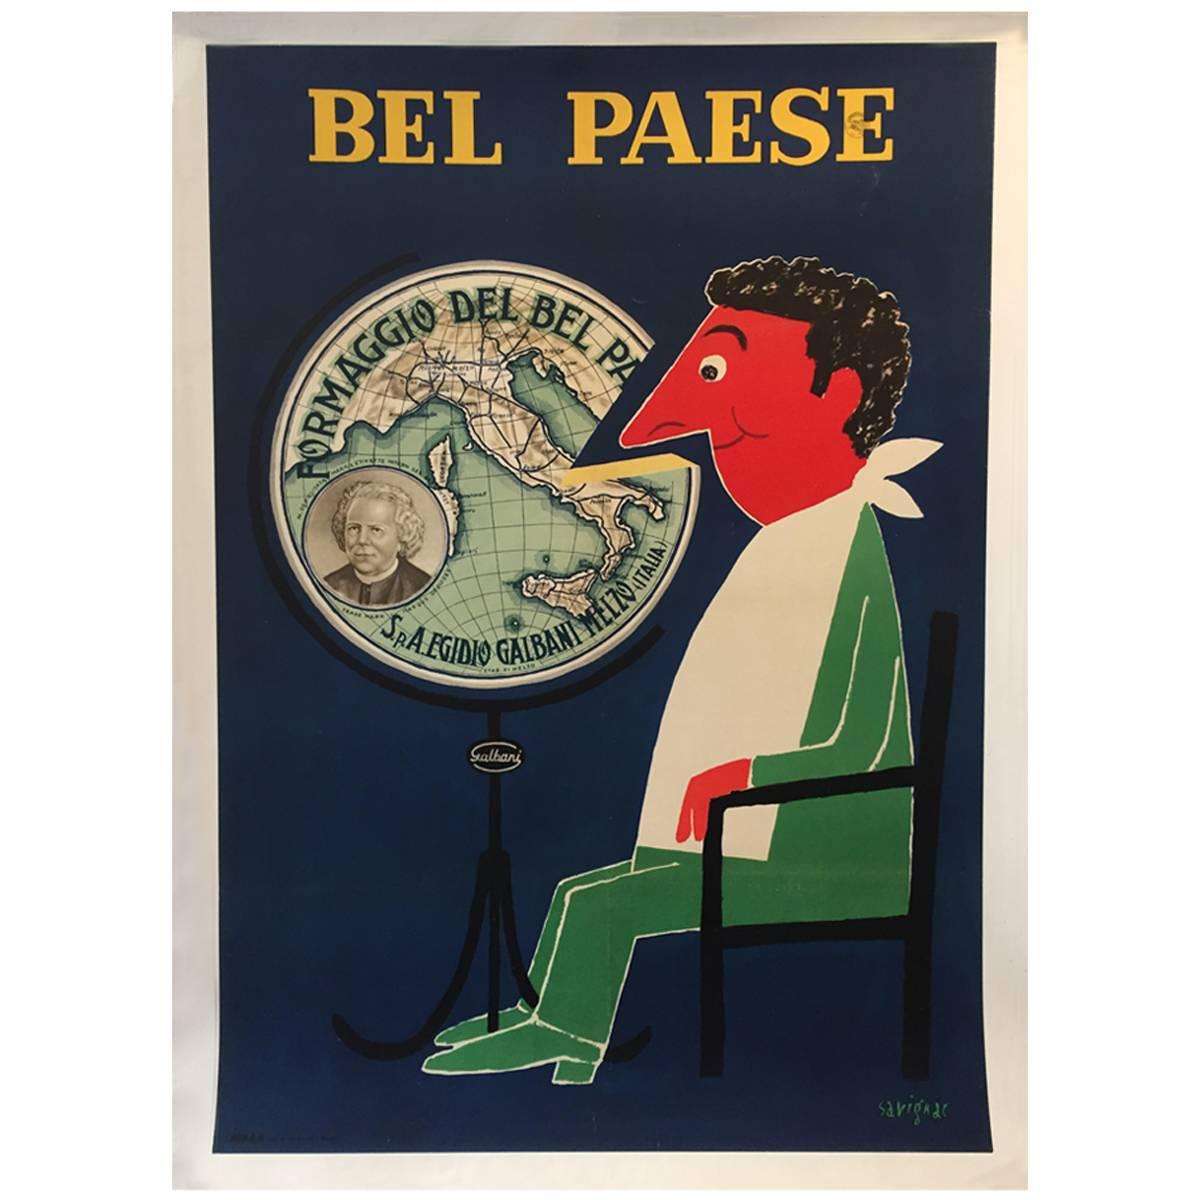 Original Vintage French Poster, Bel Paese Cheese by Savignac, 1955